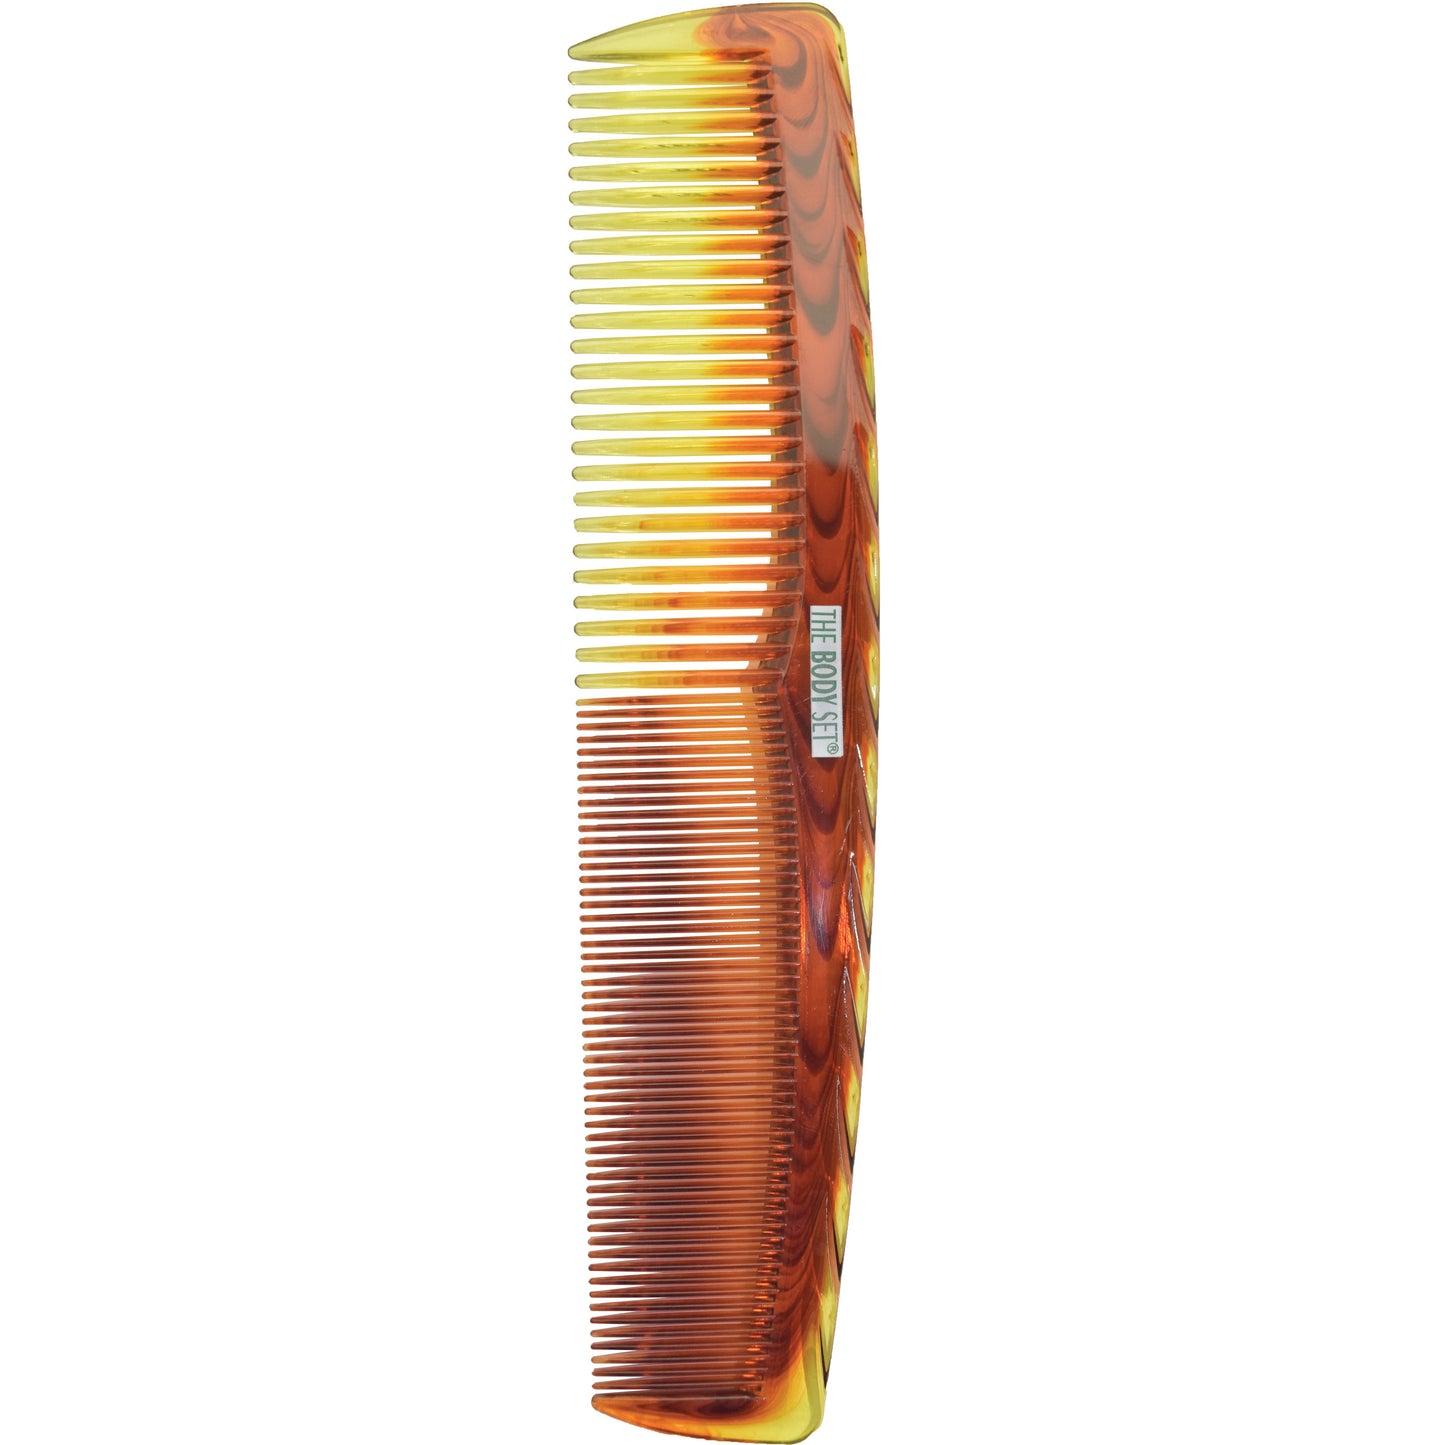 OPTIMAL Plastic Hair Brush Comb White Small